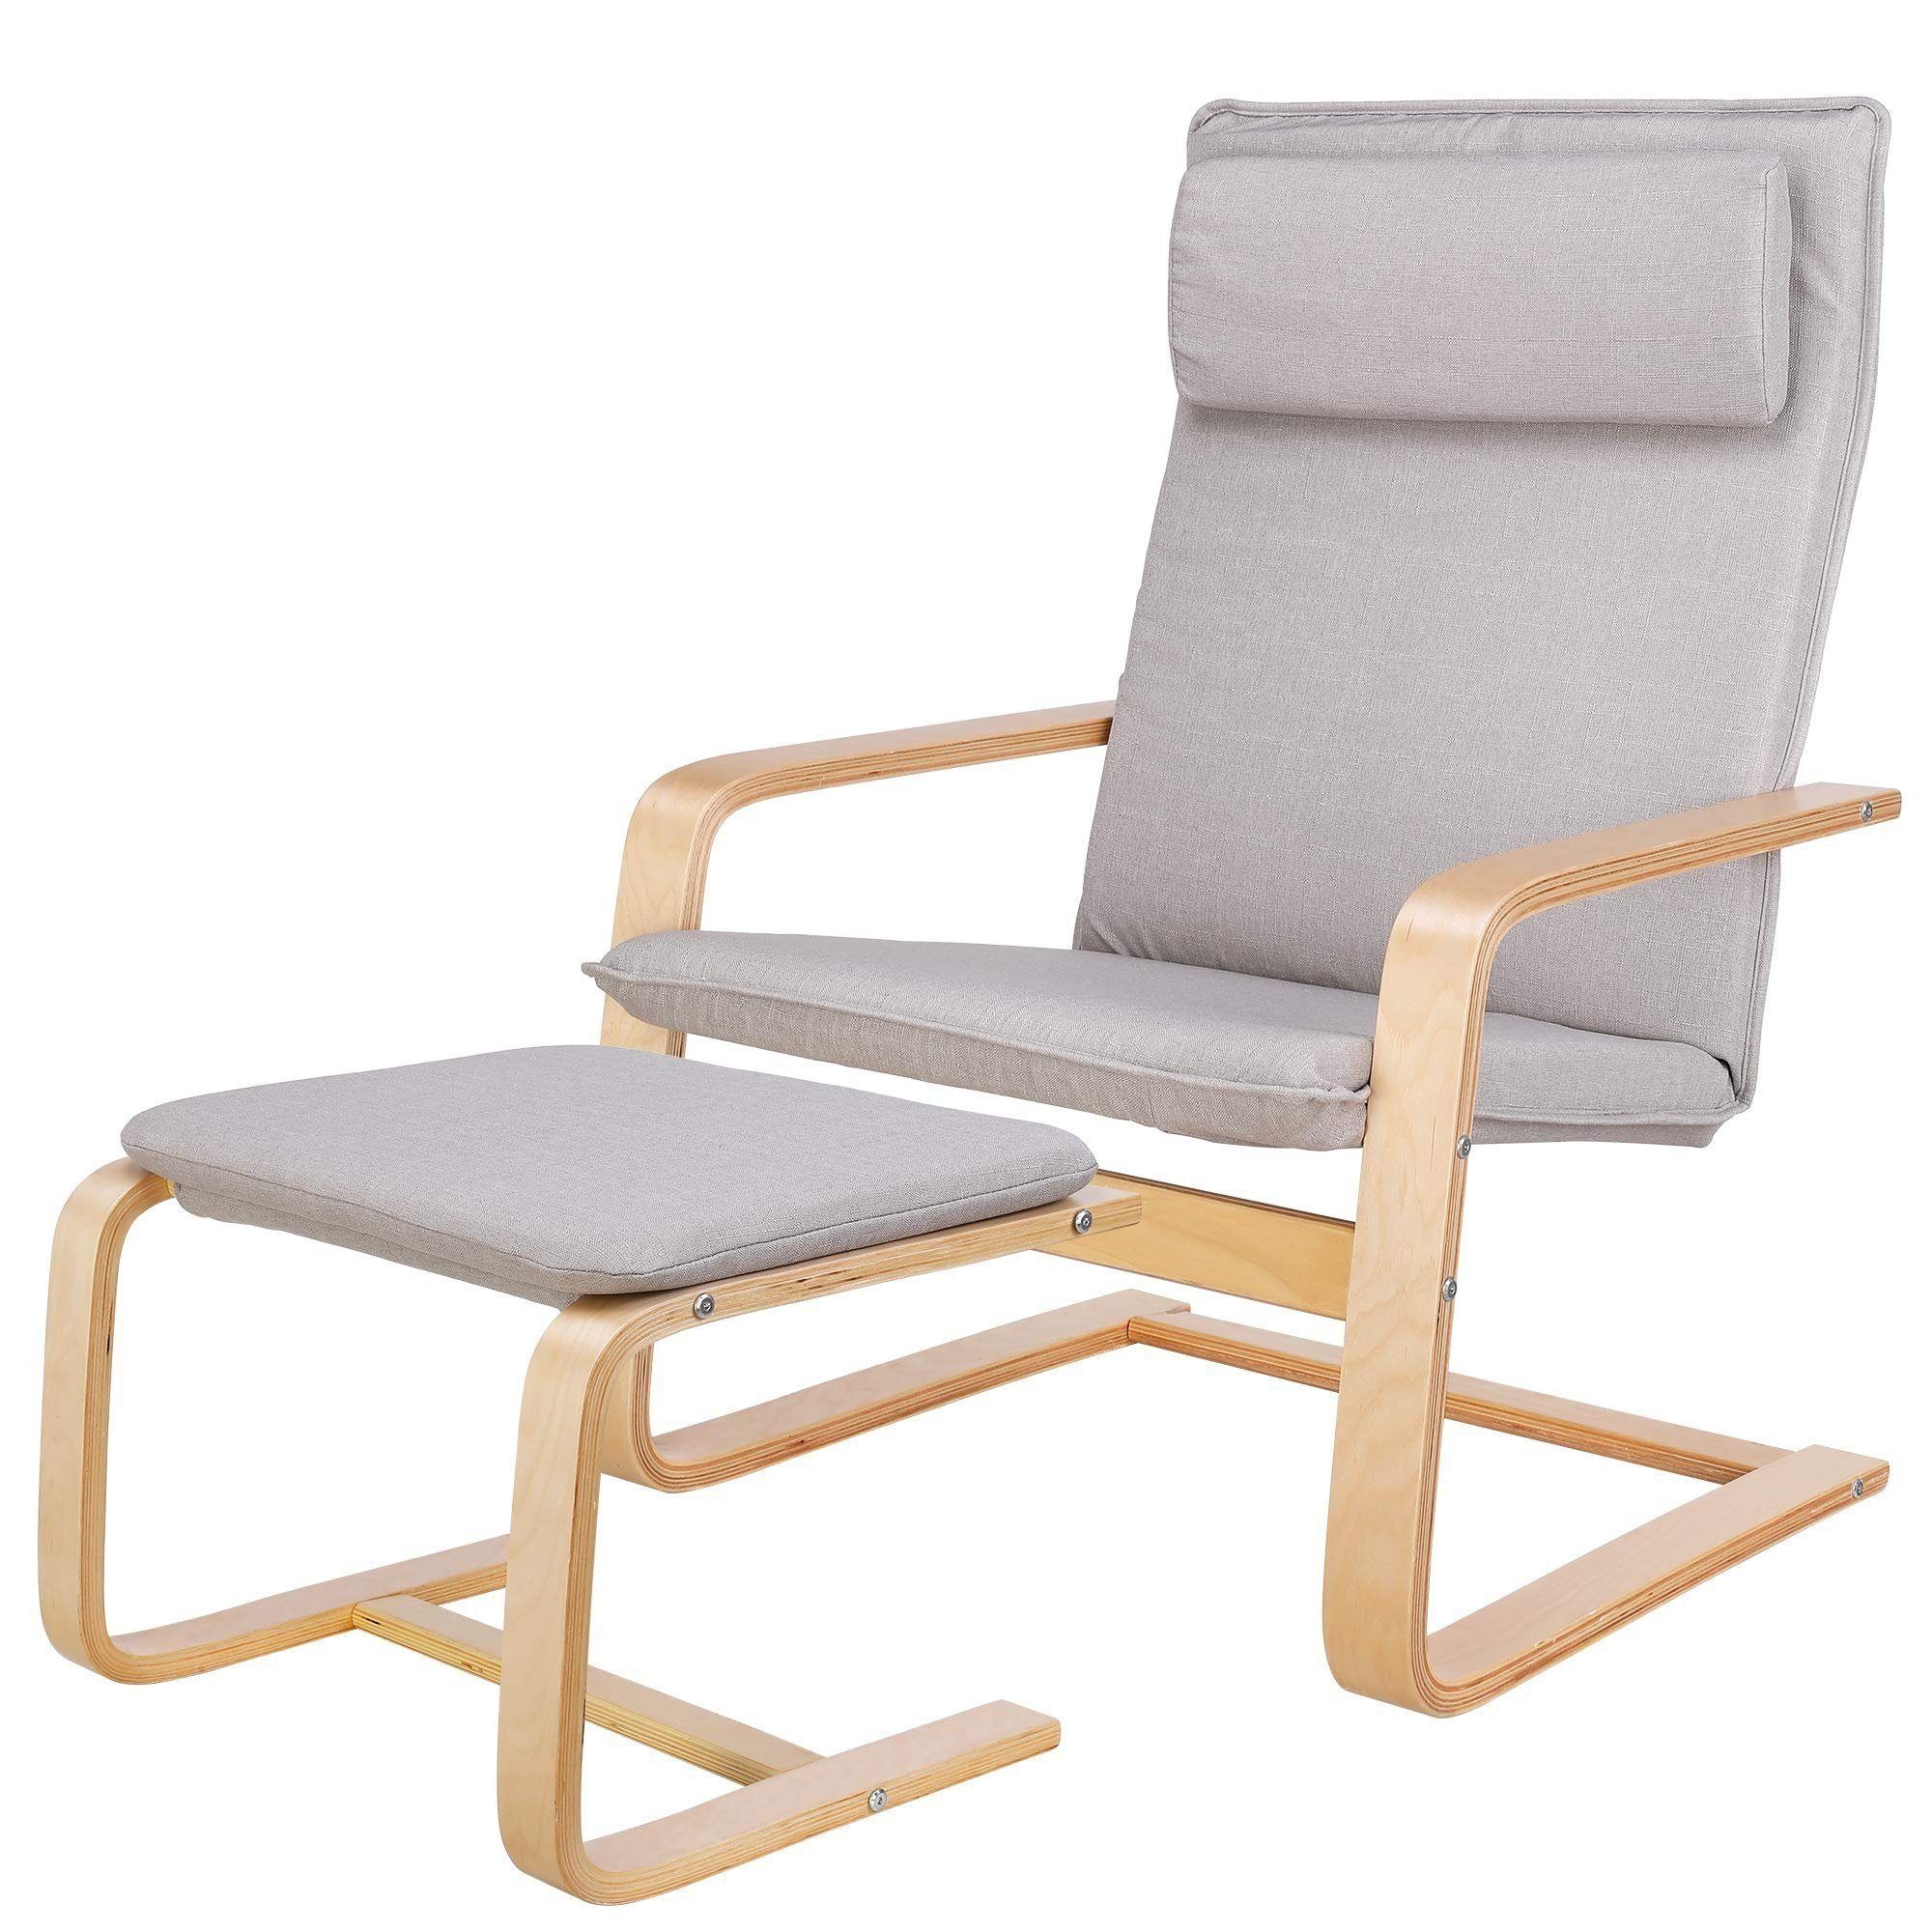 Daskoo Relaxsessel Relaxstuhl mit Fußhocker und Armlehne,66.5x69x96.5 cm (Relaxsessel mit hocker), Sessel Armlehnensessel aus Birkenholz Grau